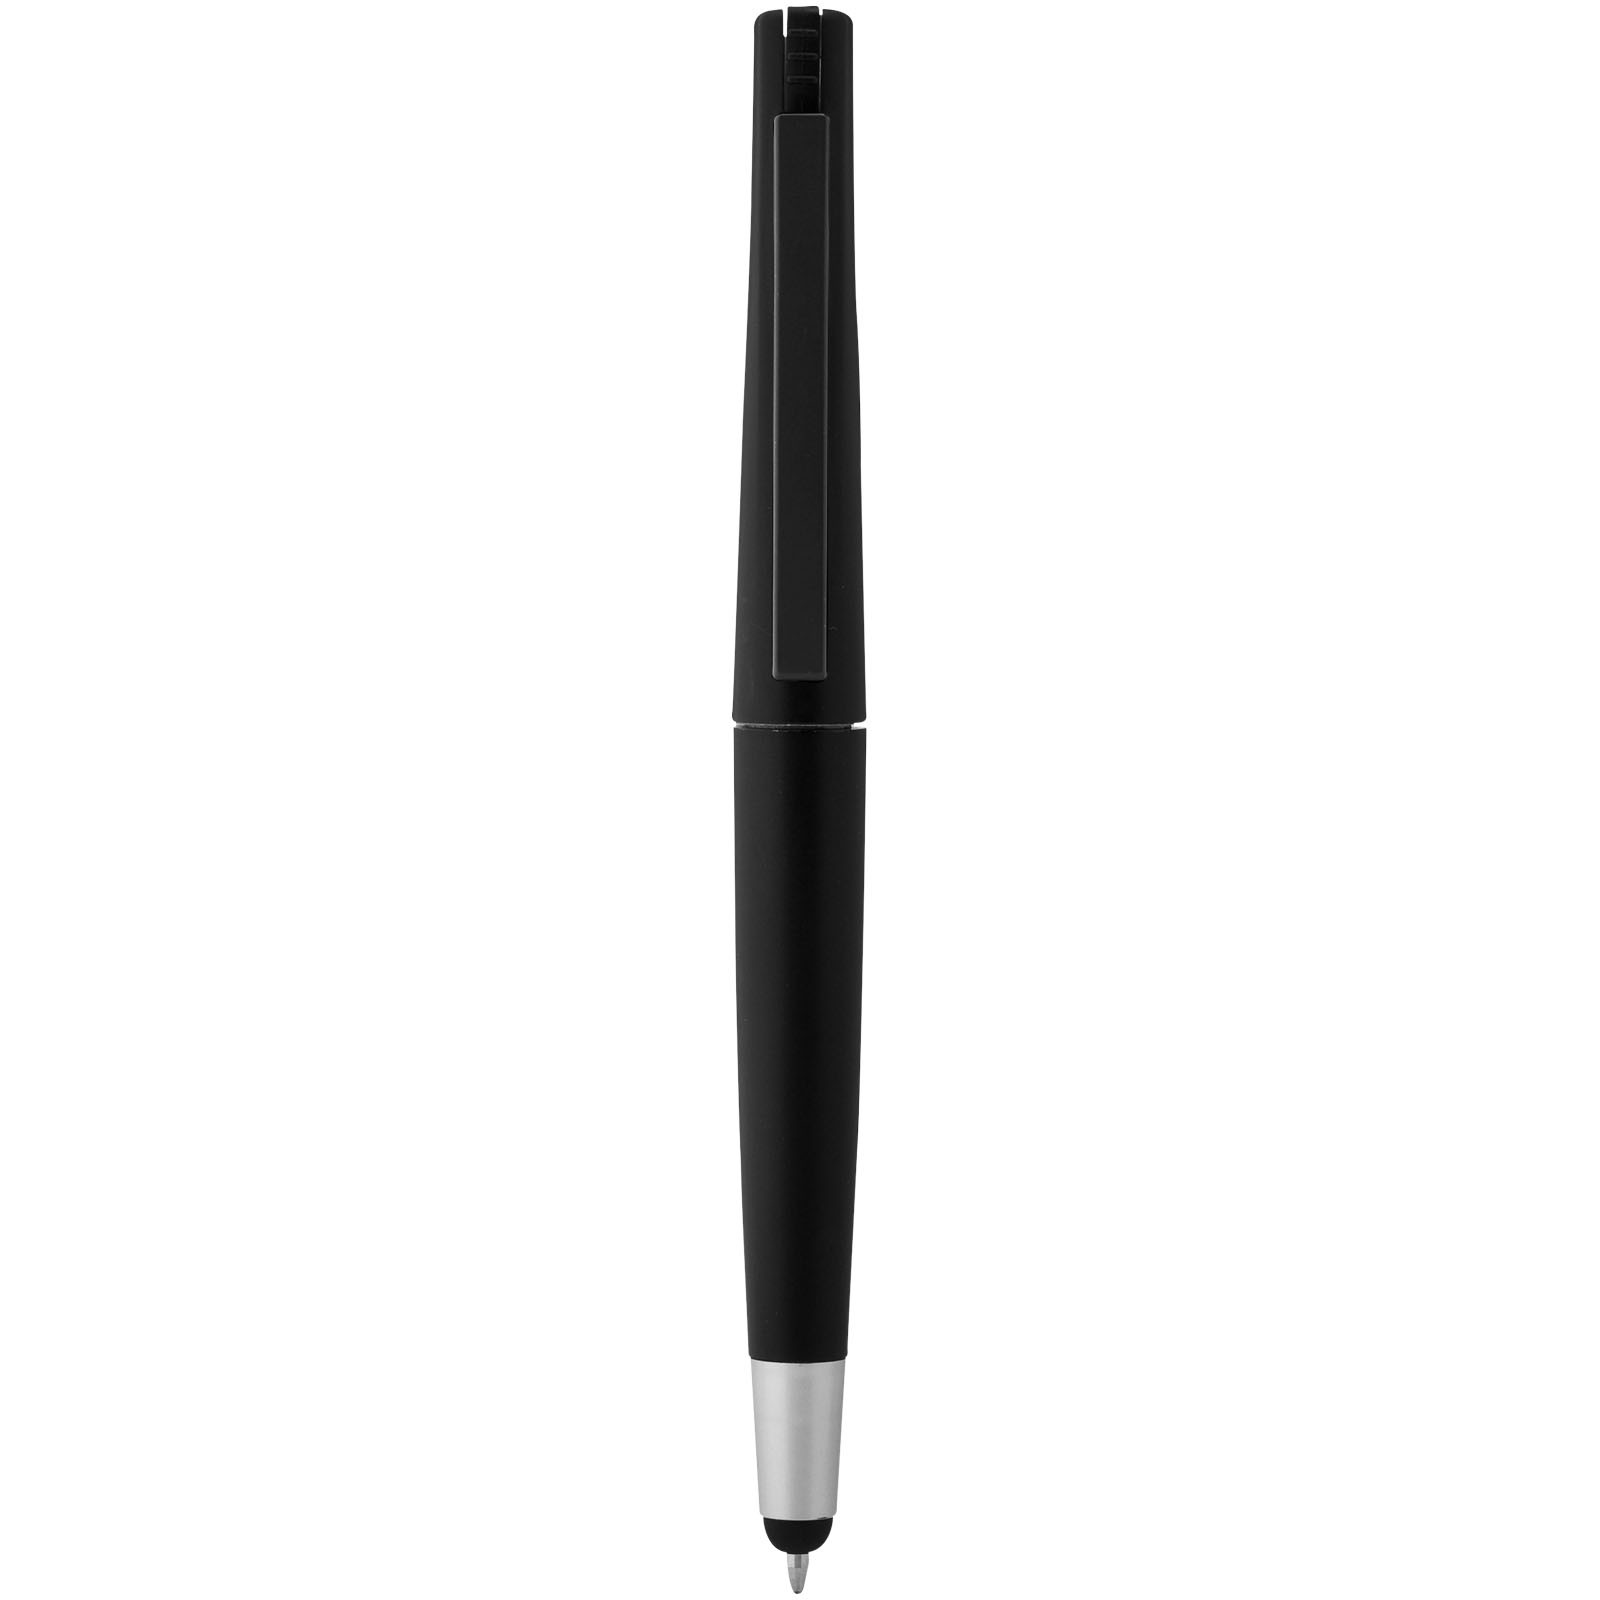 Naju stylus ballpoint pen with 4GB flash drive - Solid Black / 4GB